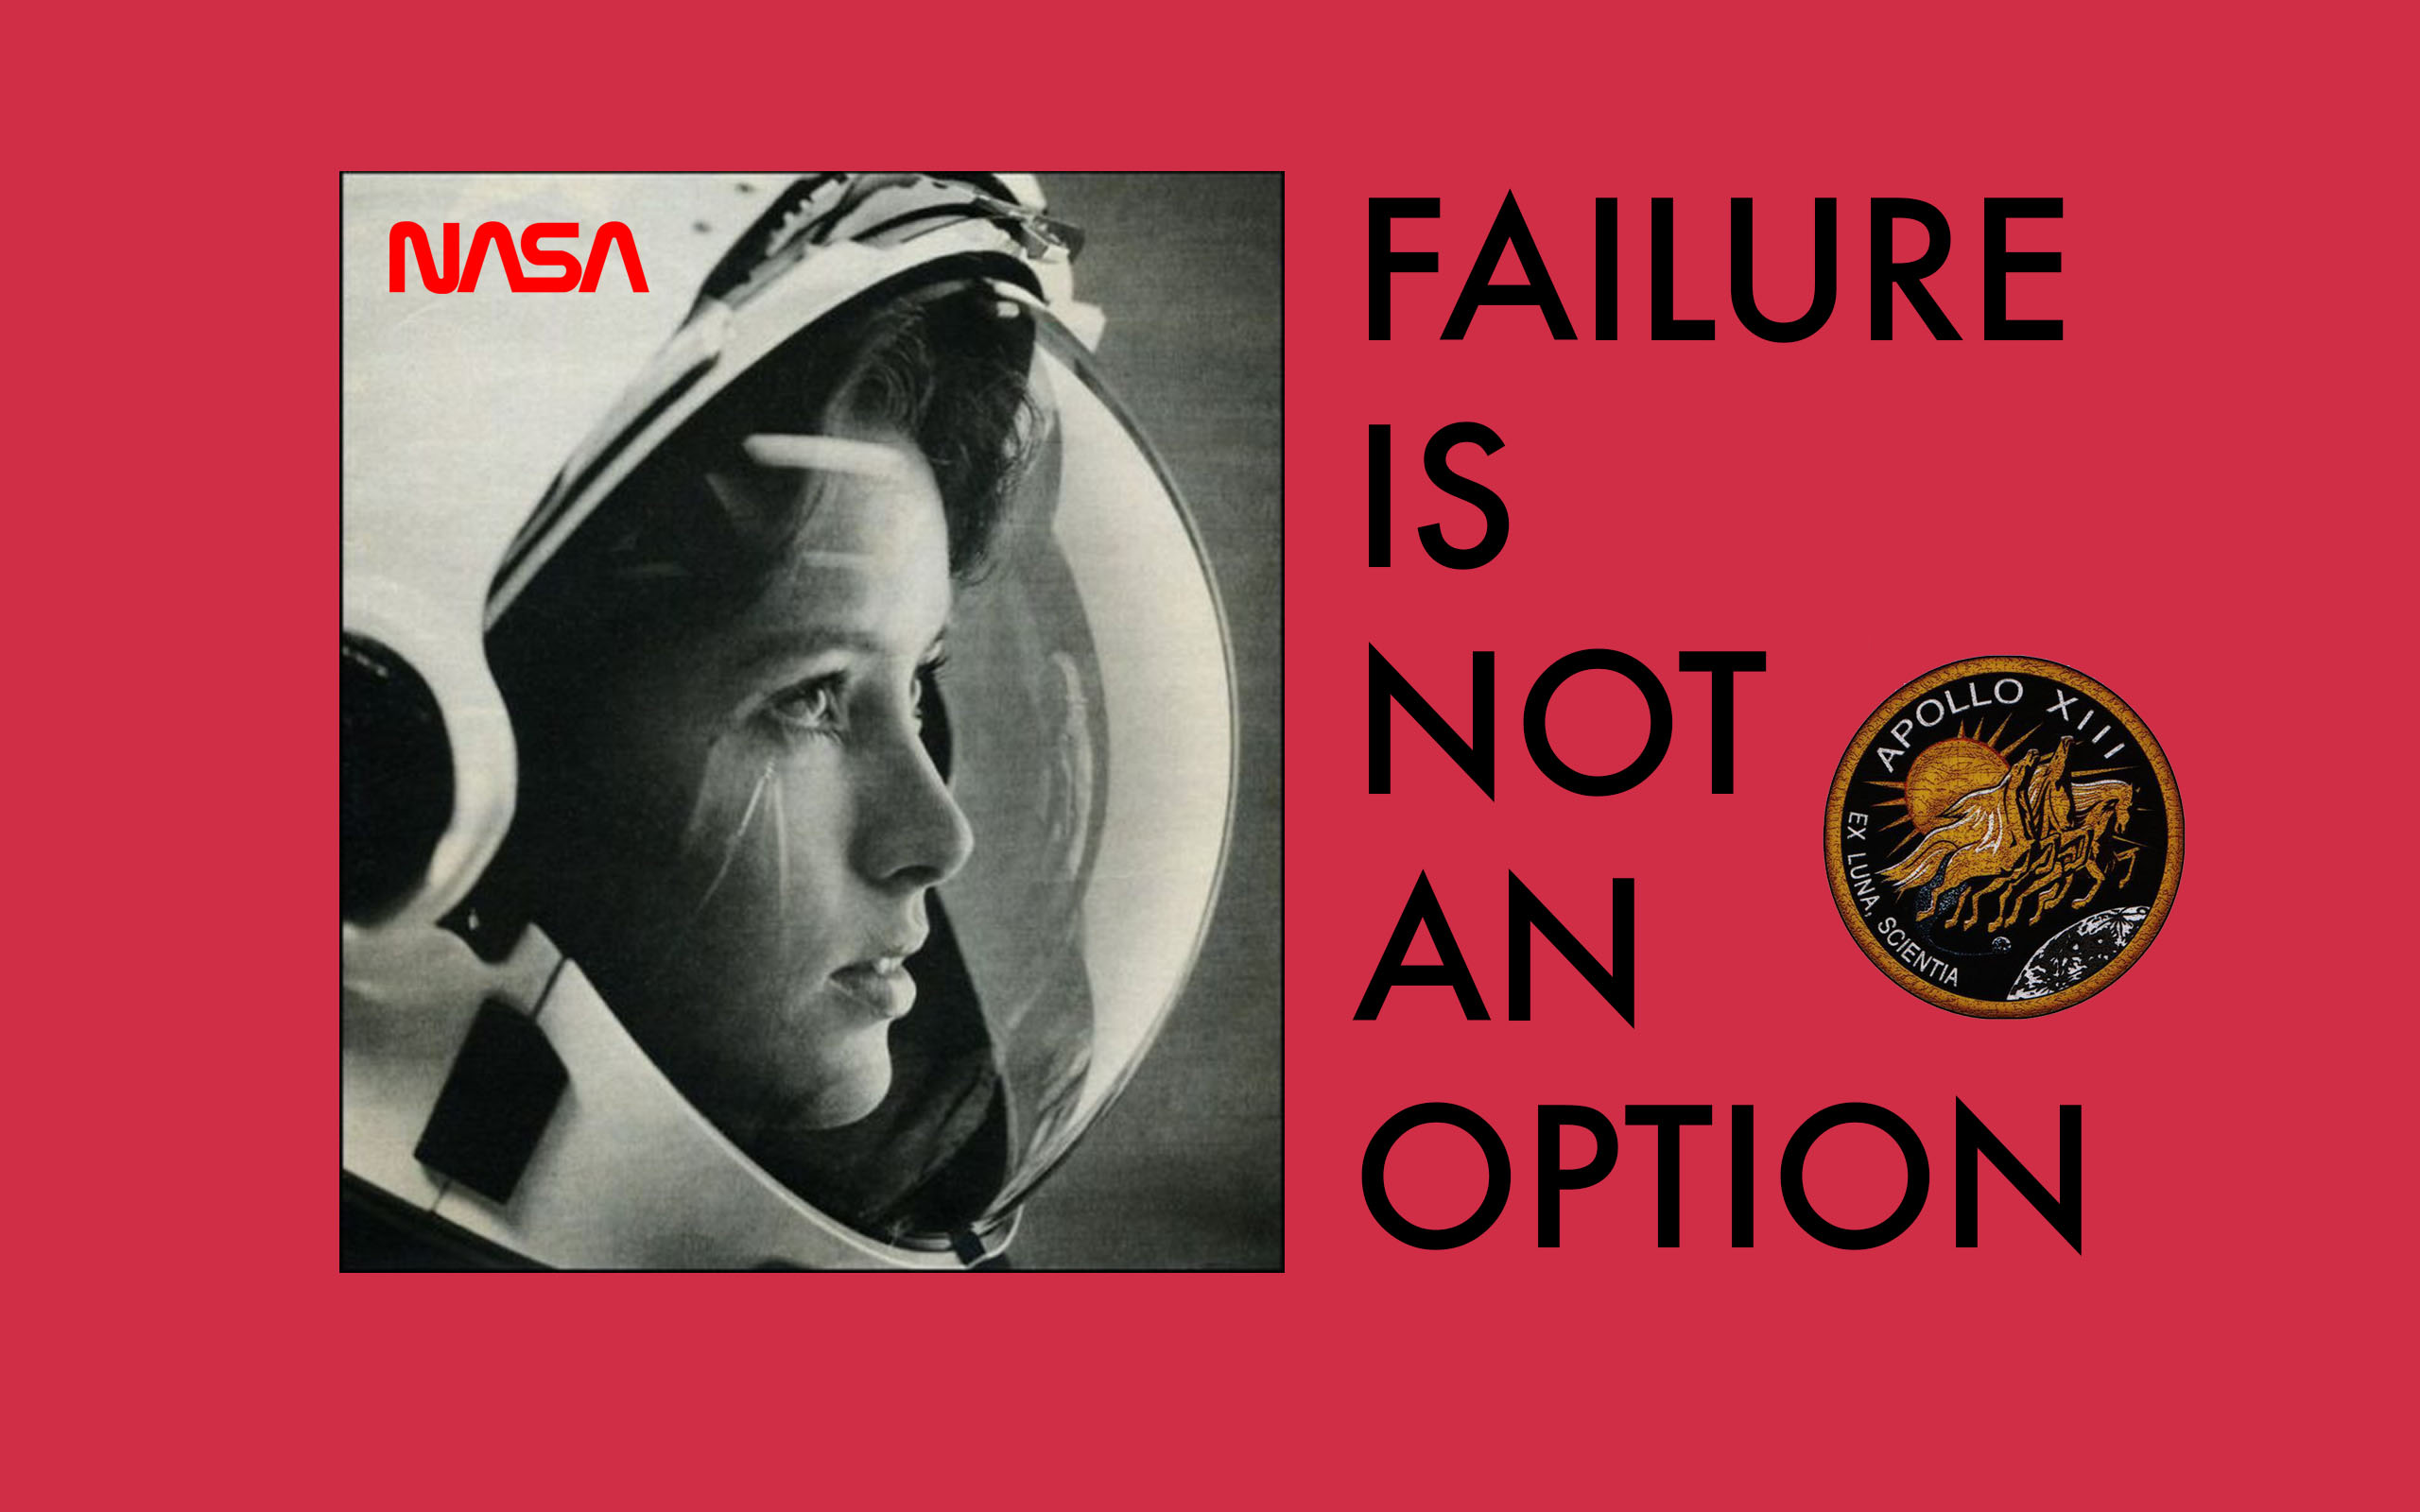 NASA- failure is not an option woman astronaut